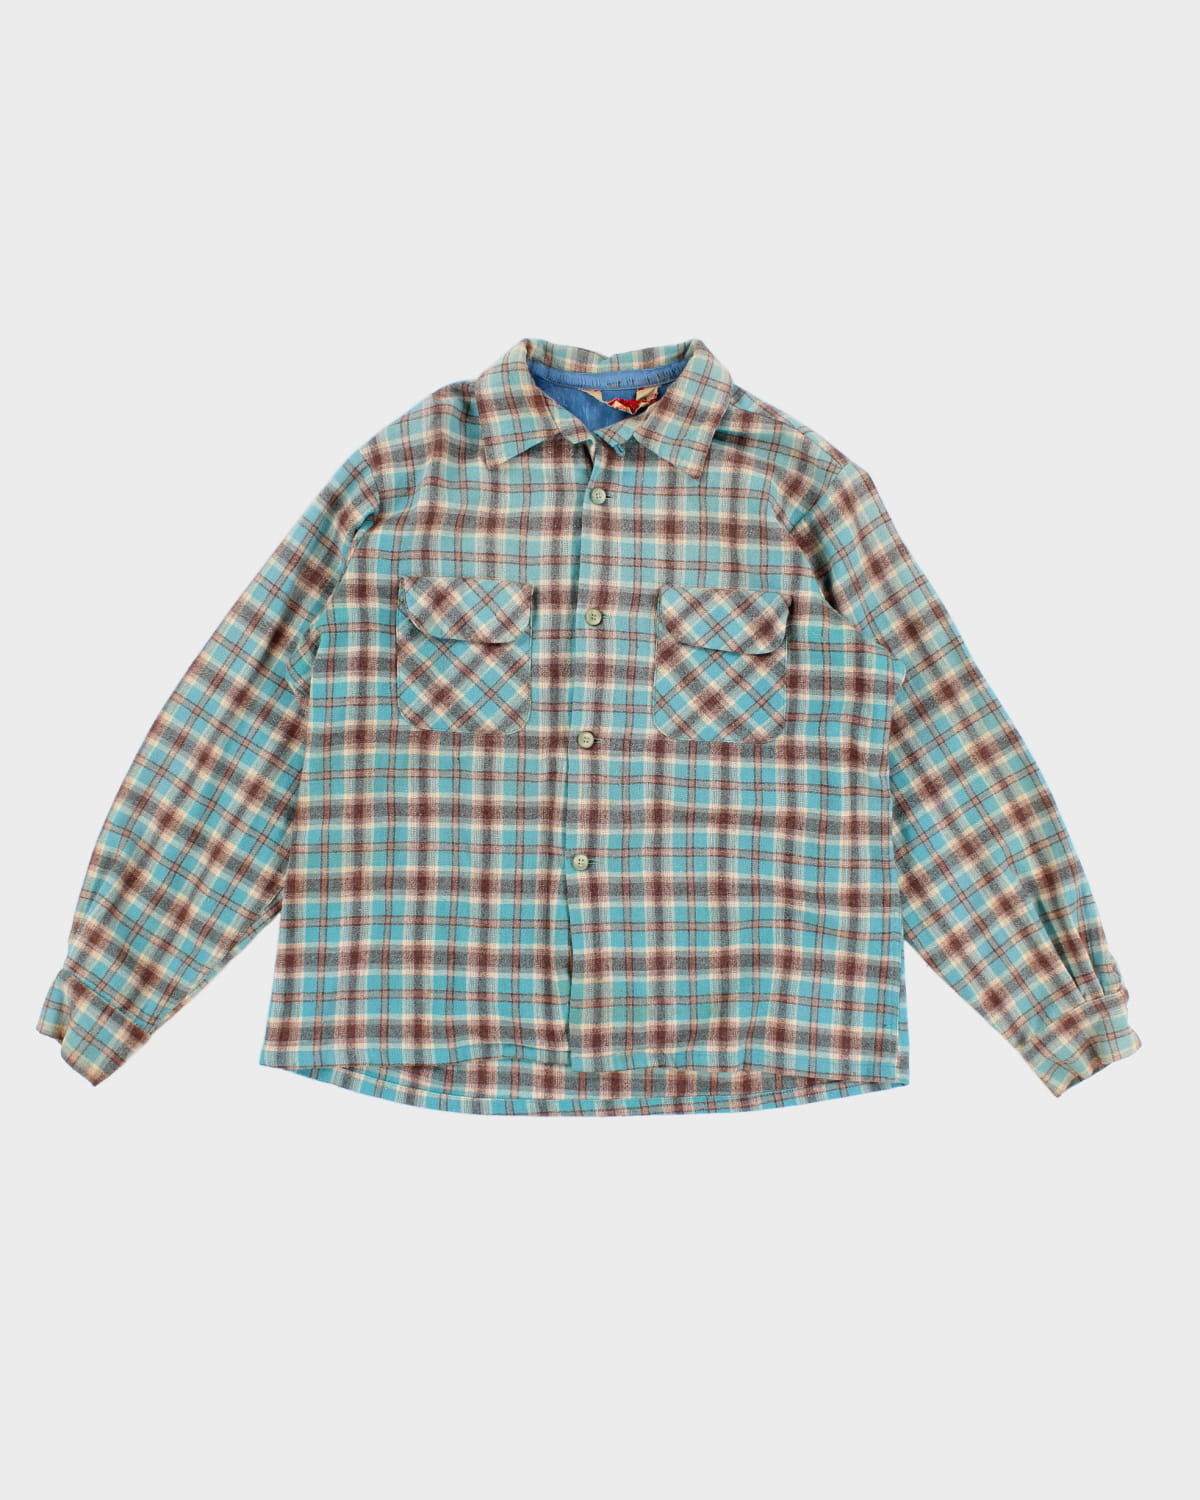 Vintage 50s Flannel Shirt - M